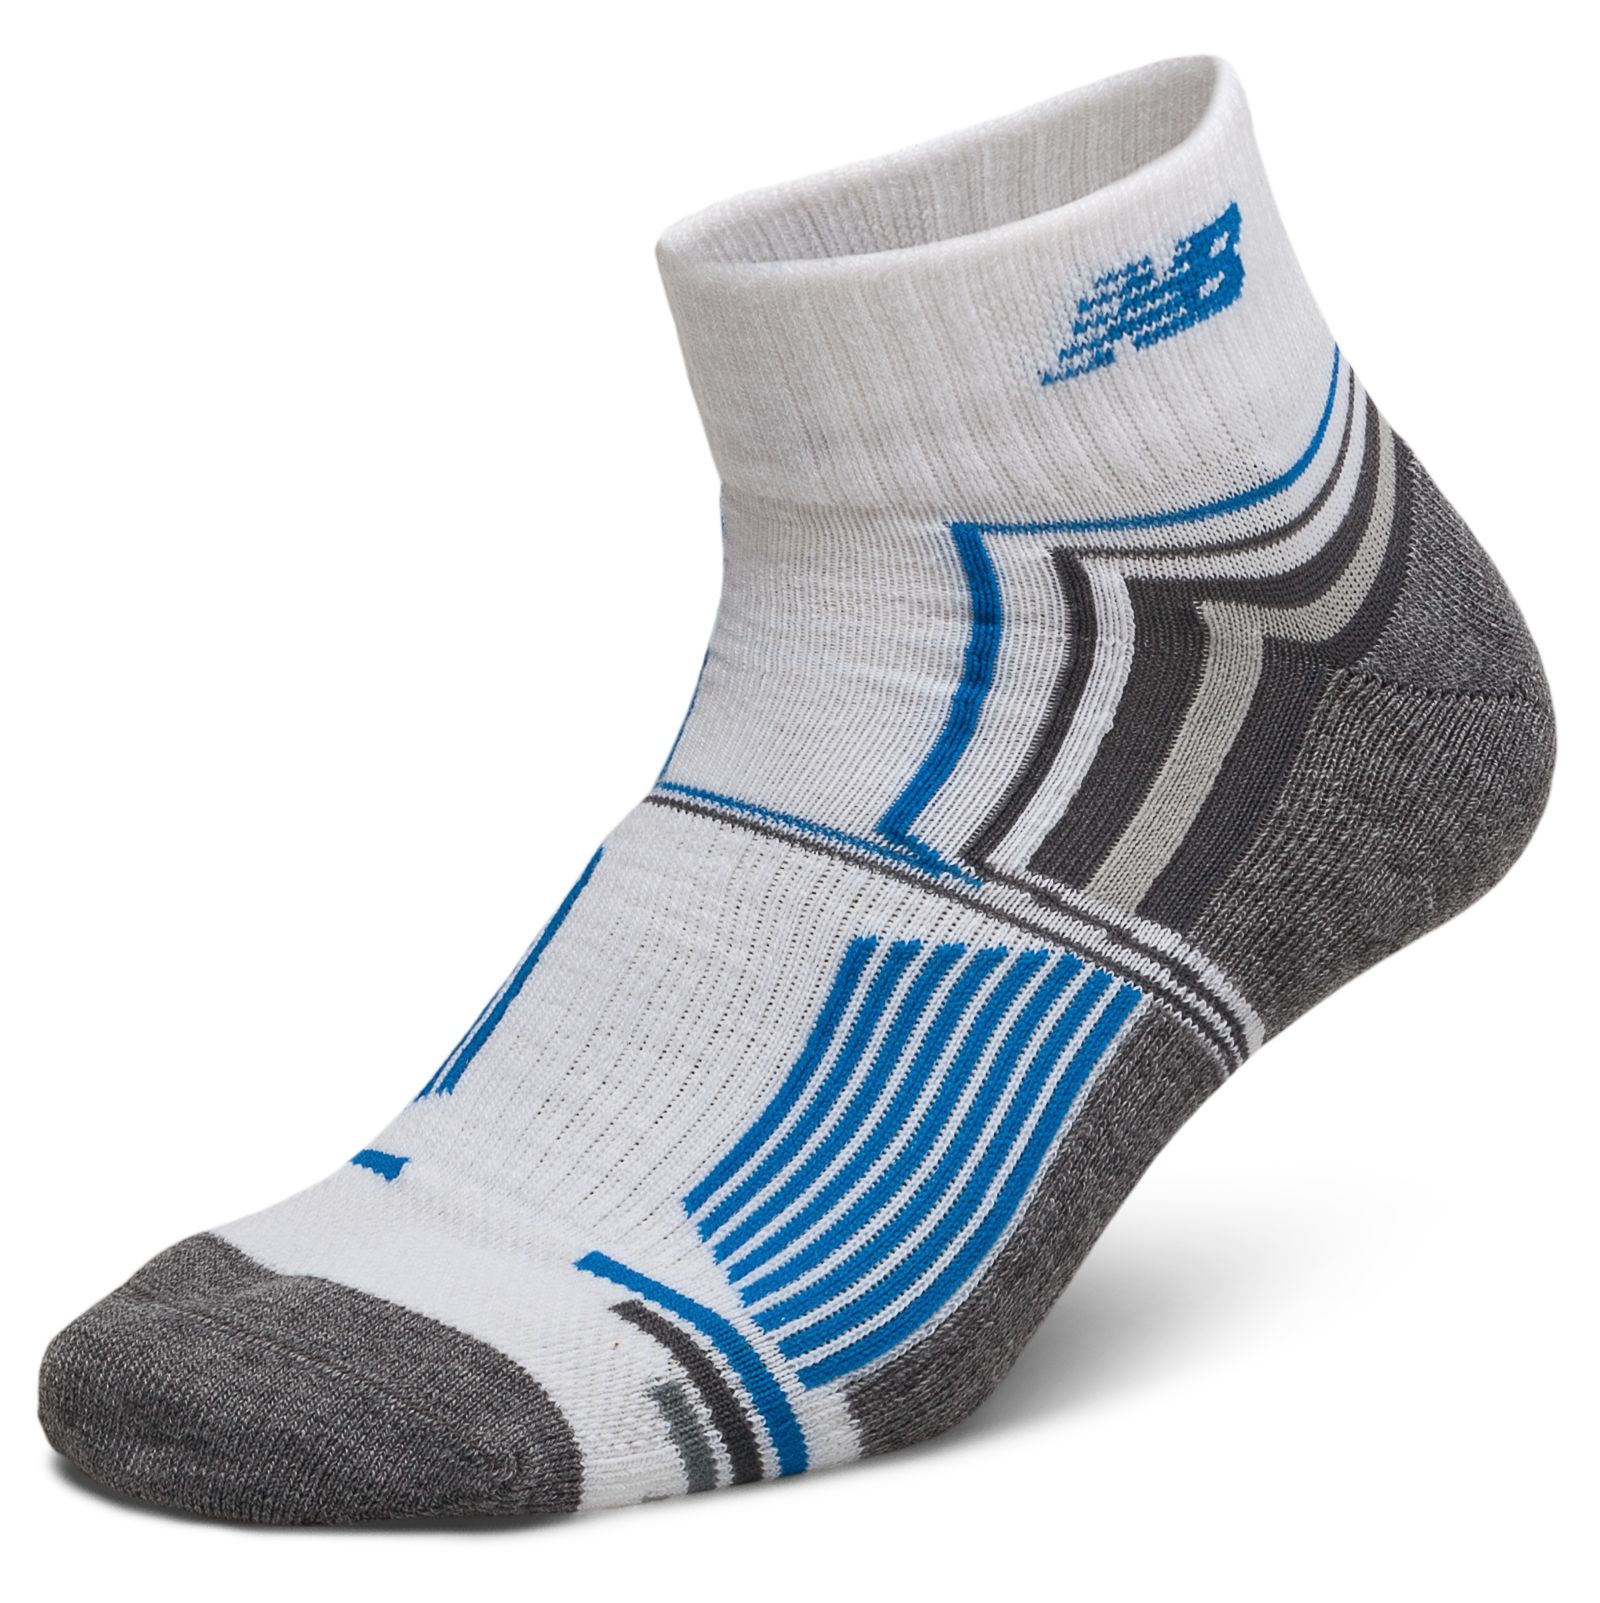 Ankle 3 pack - Unisex 674 - Socks, - New Balance - US - 2